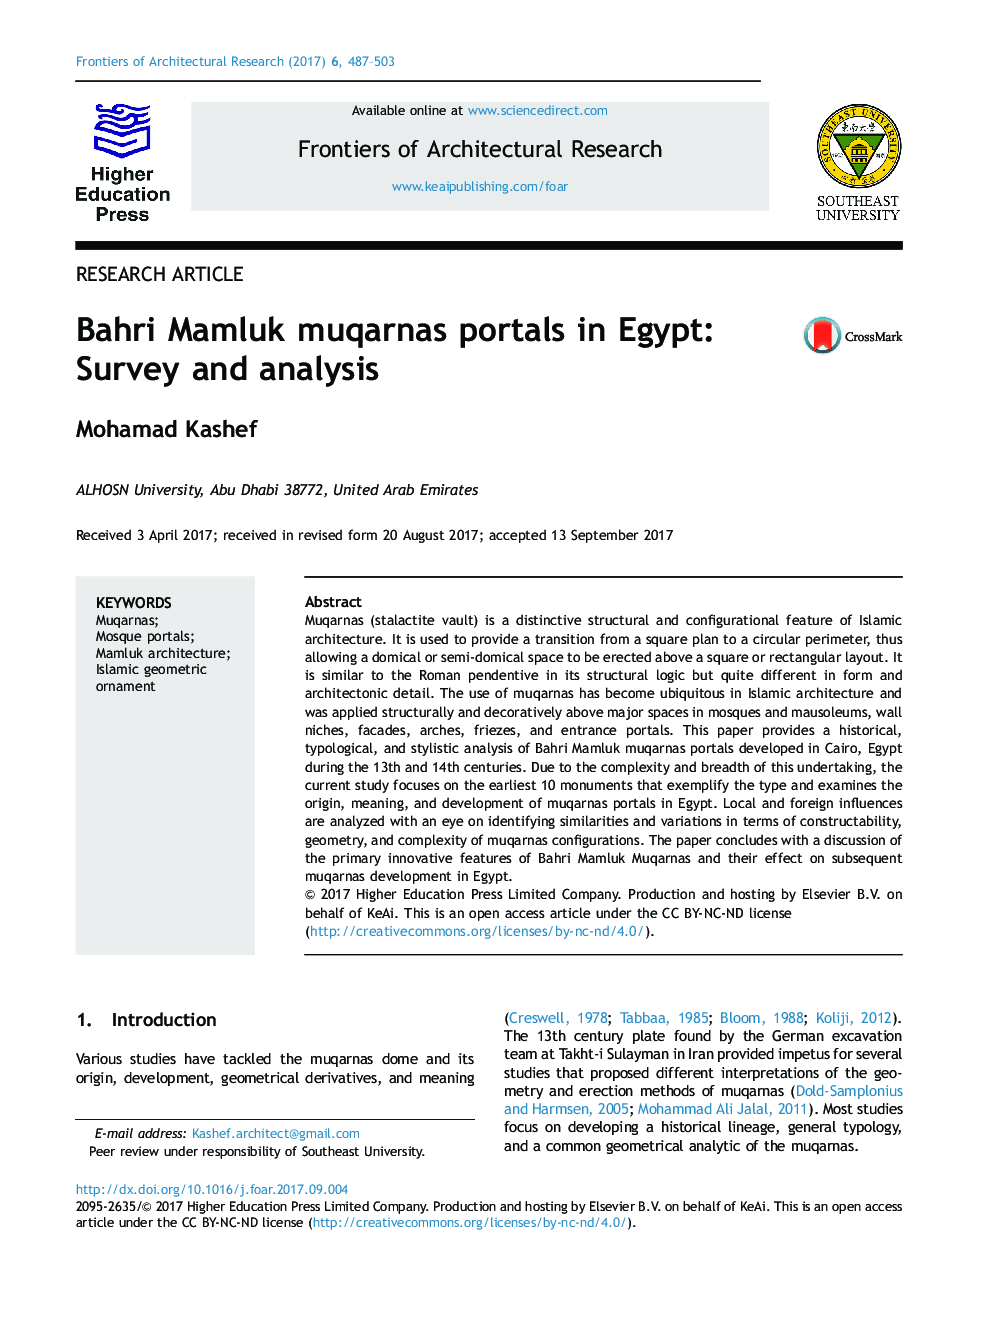 Bahri Mamluk muqarnas portals in Egypt: Survey and analysis